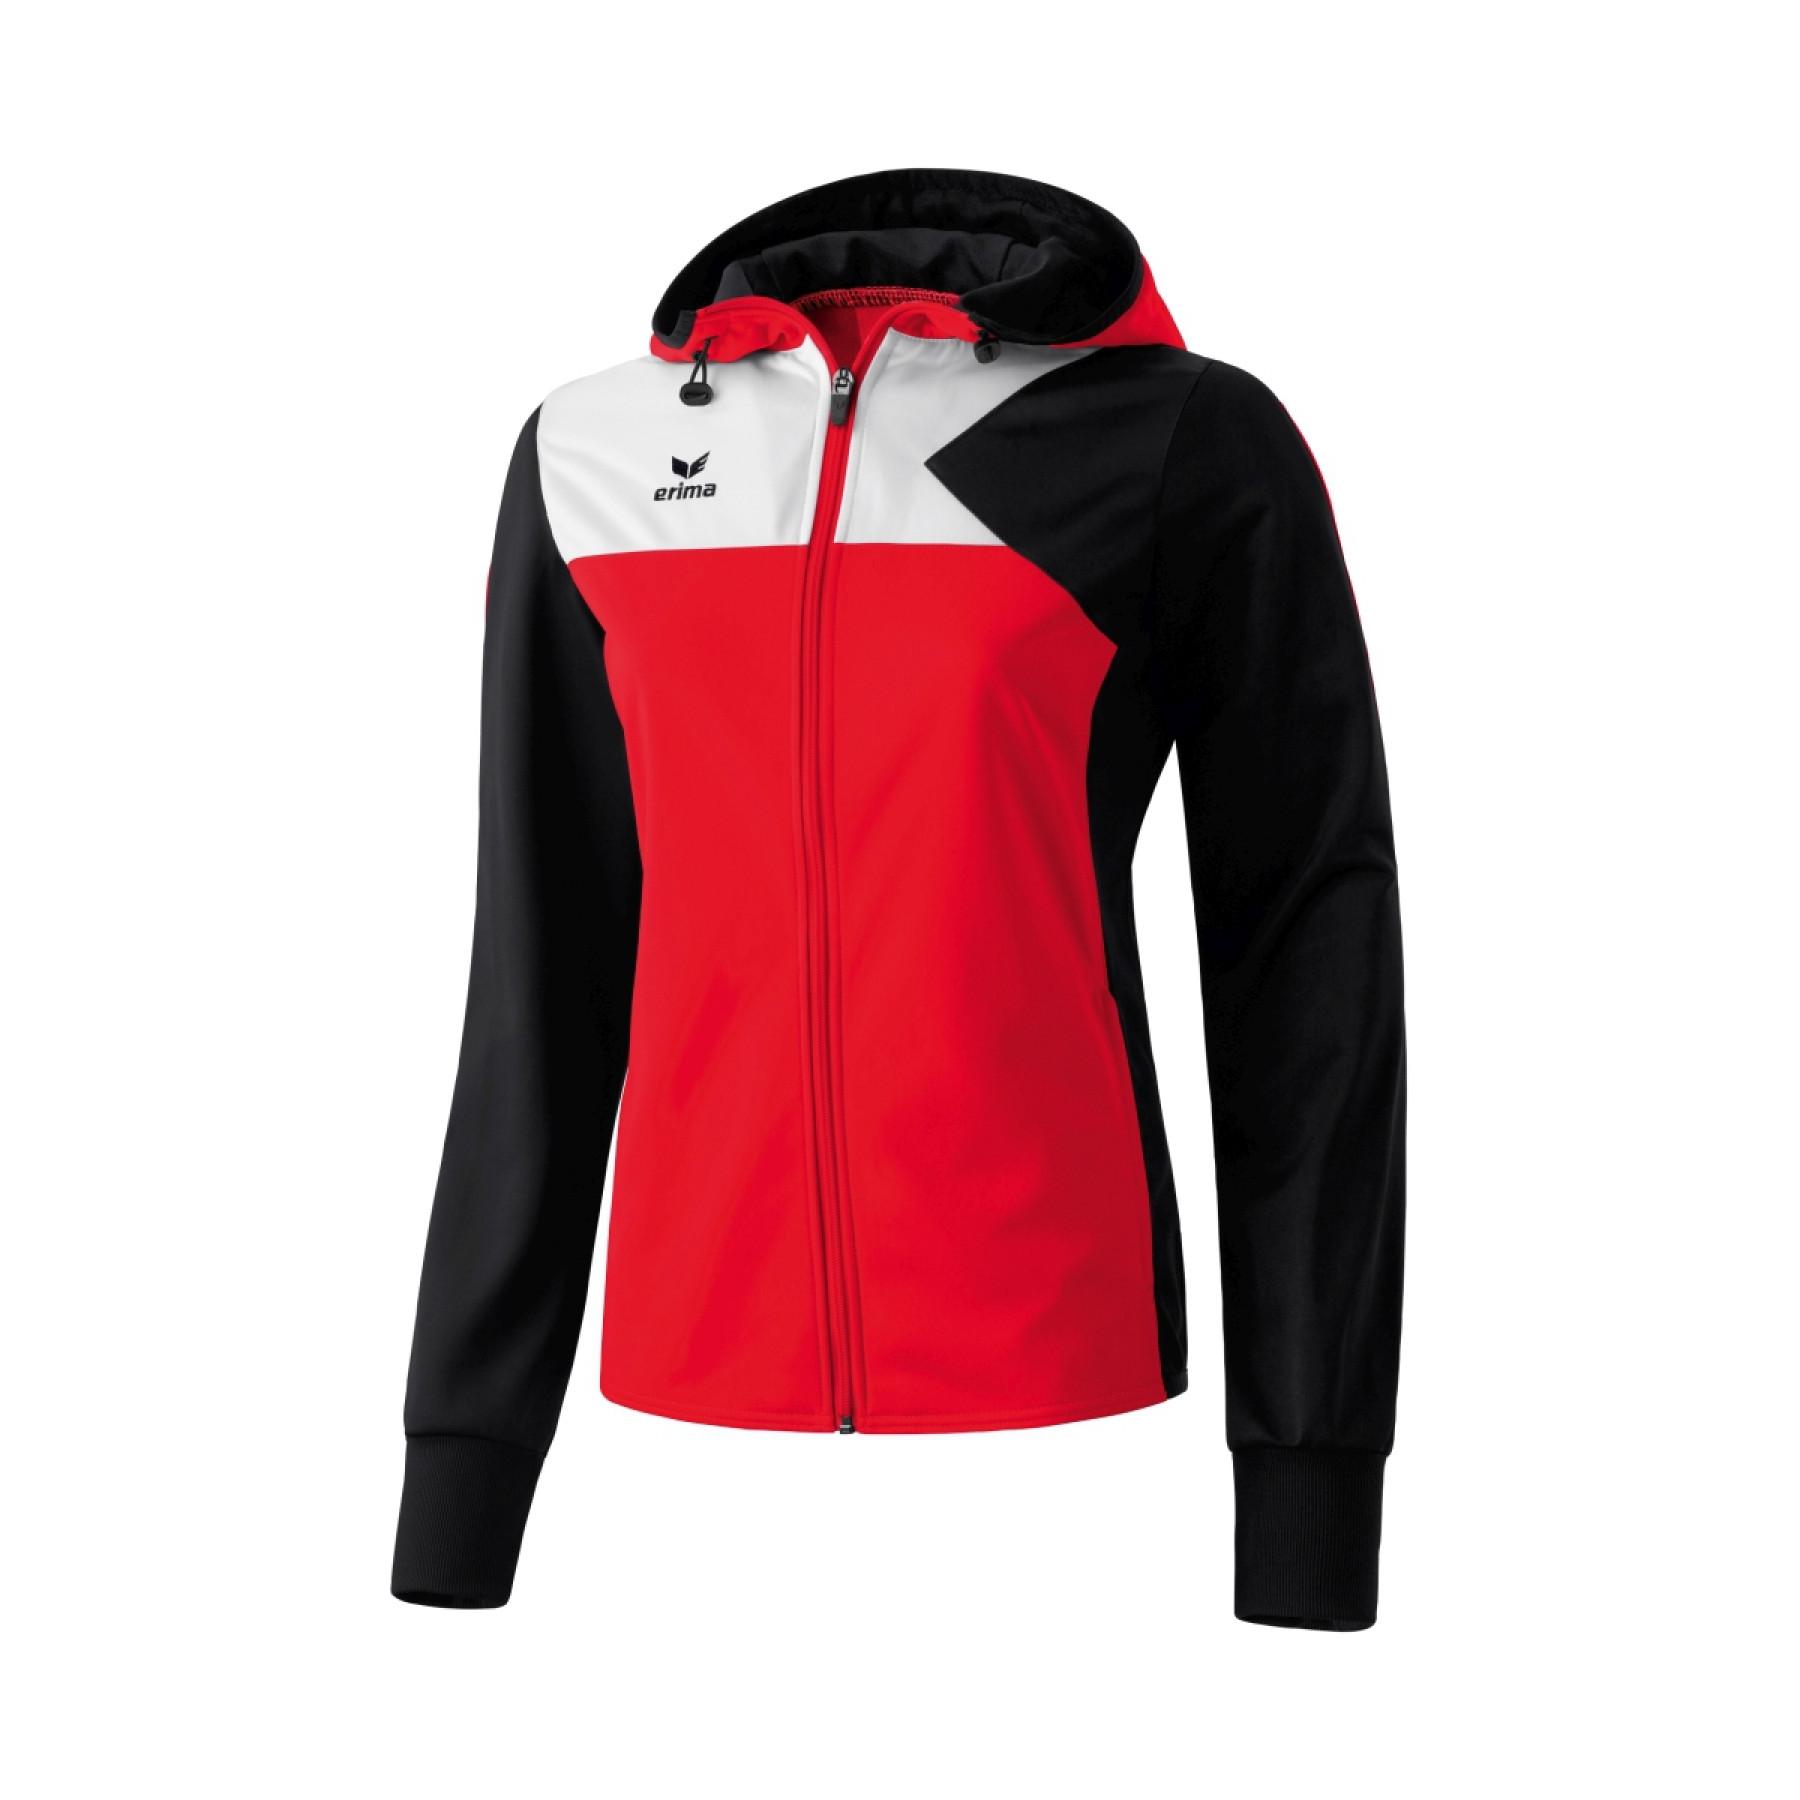 Women's hooded training jacket Erima Premium One - Textile - Handball wear